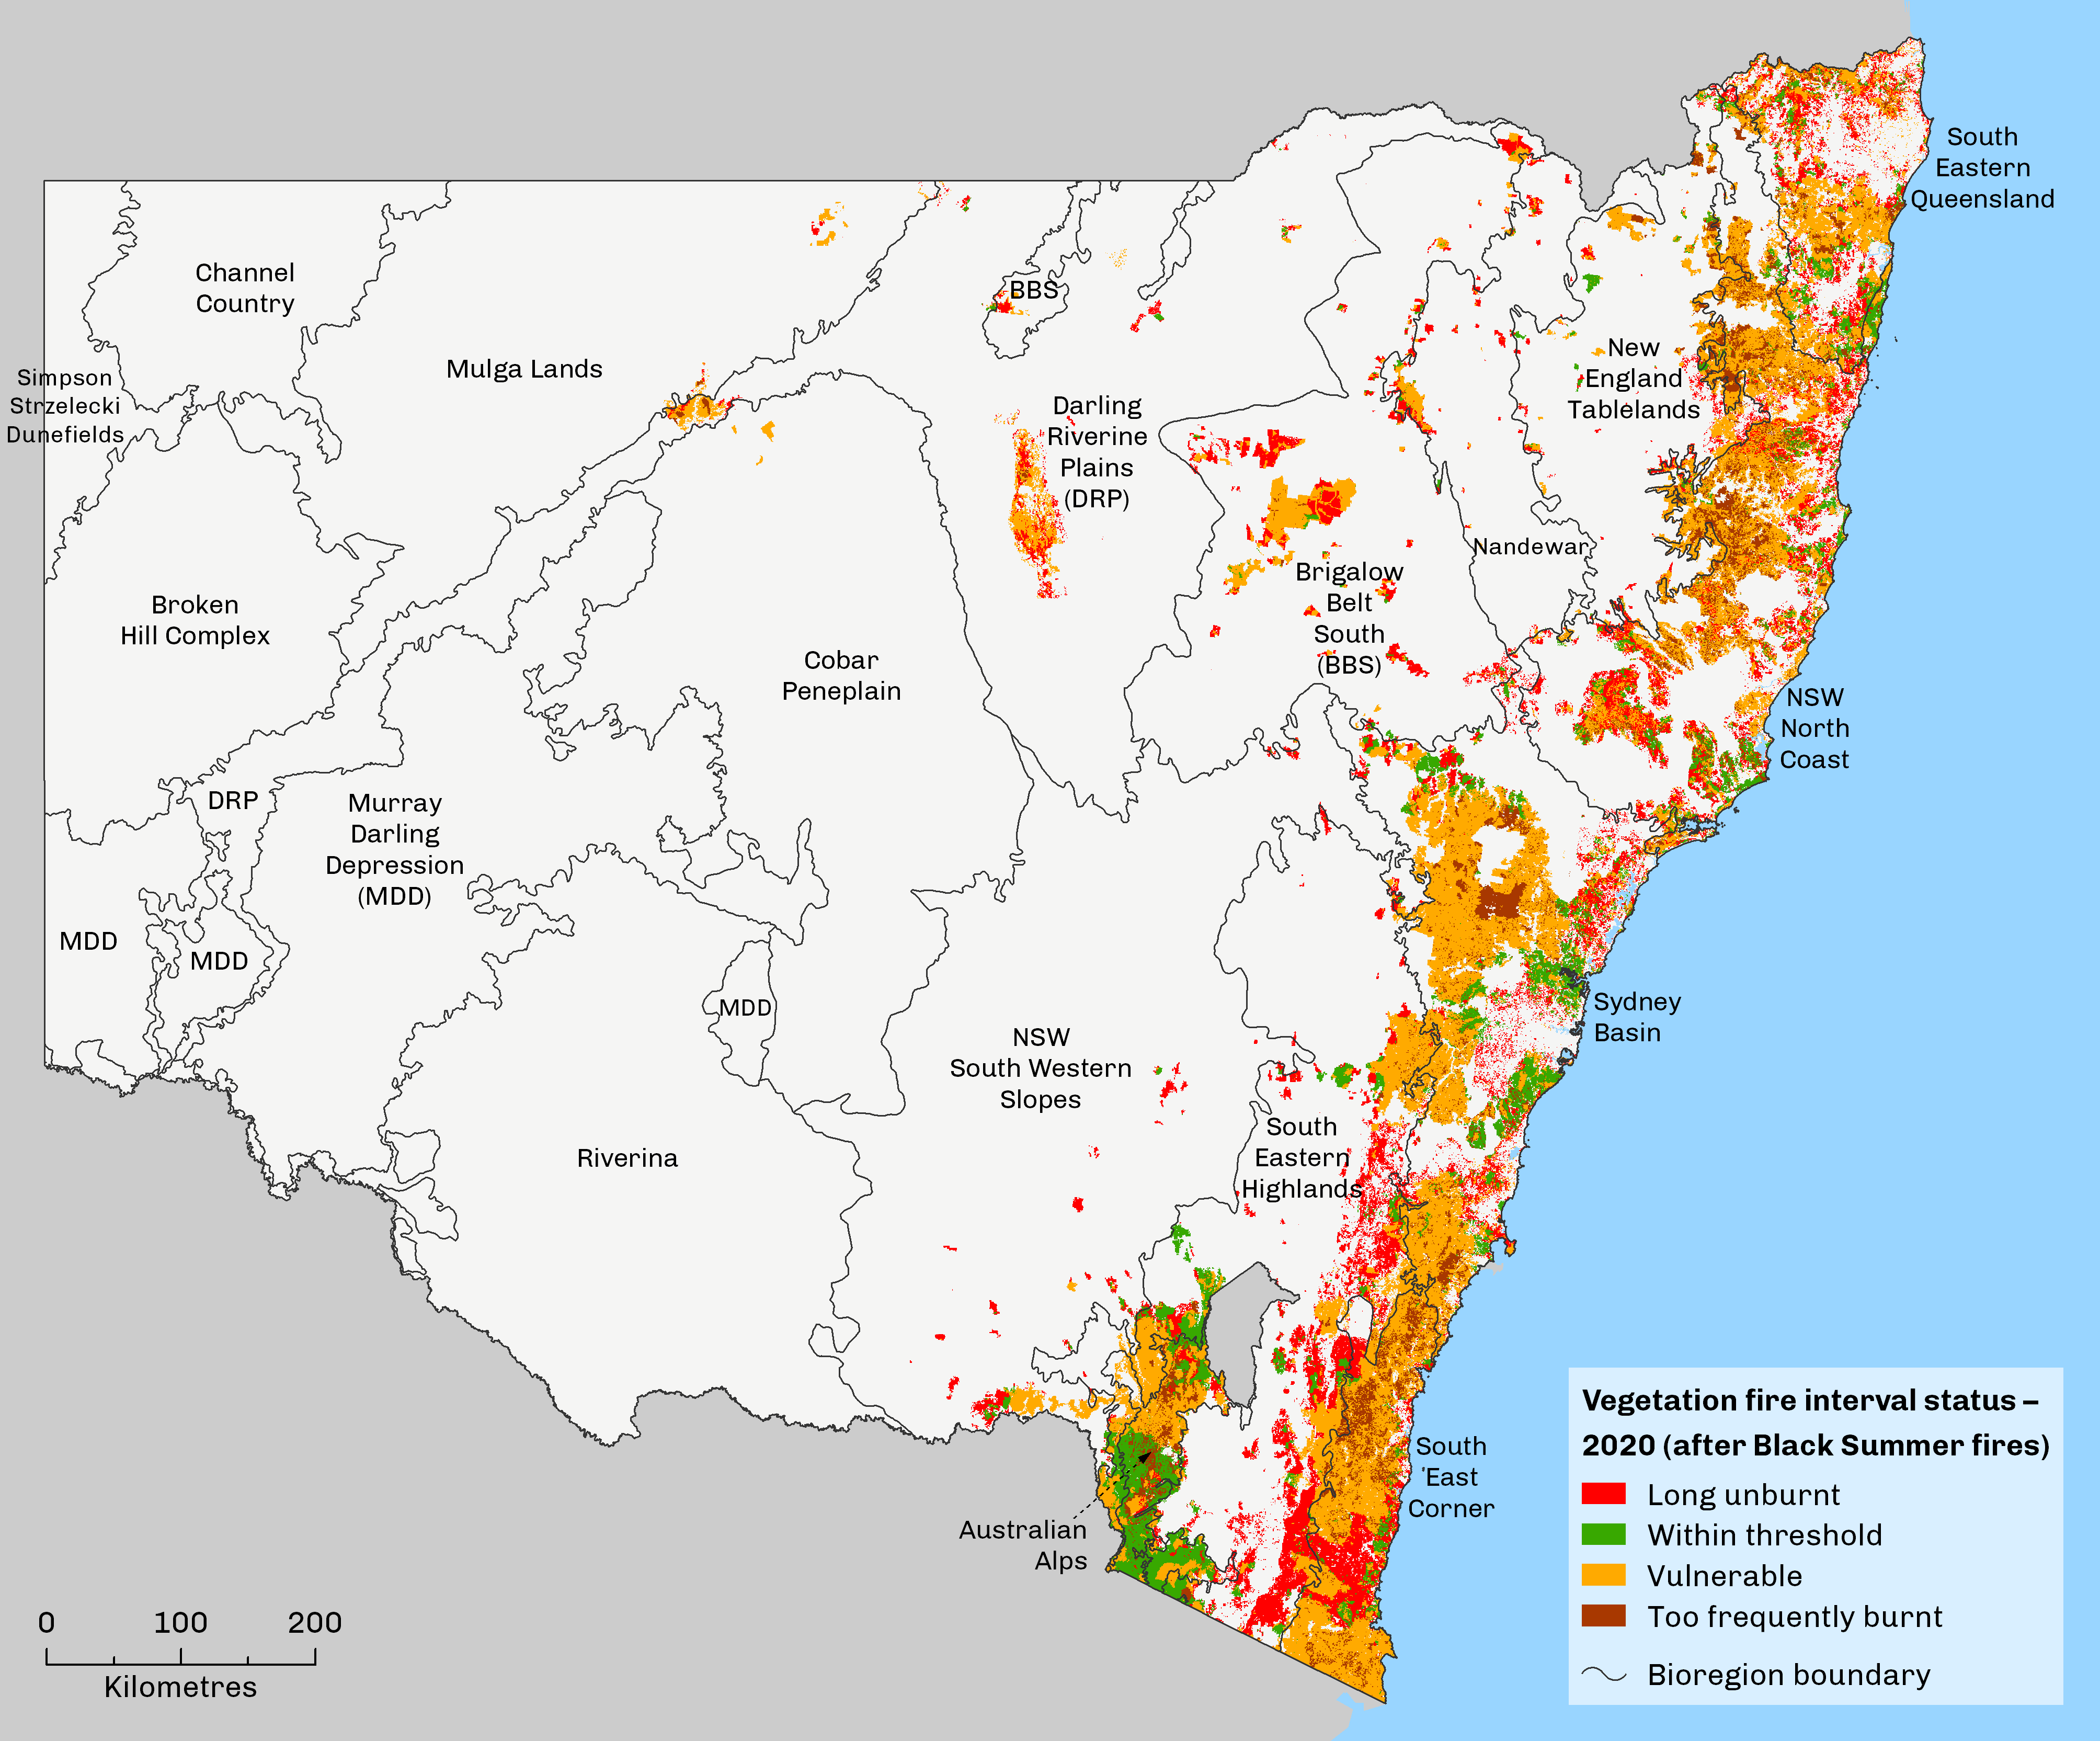 map showing vegetation fire threshold status, after black summer fires